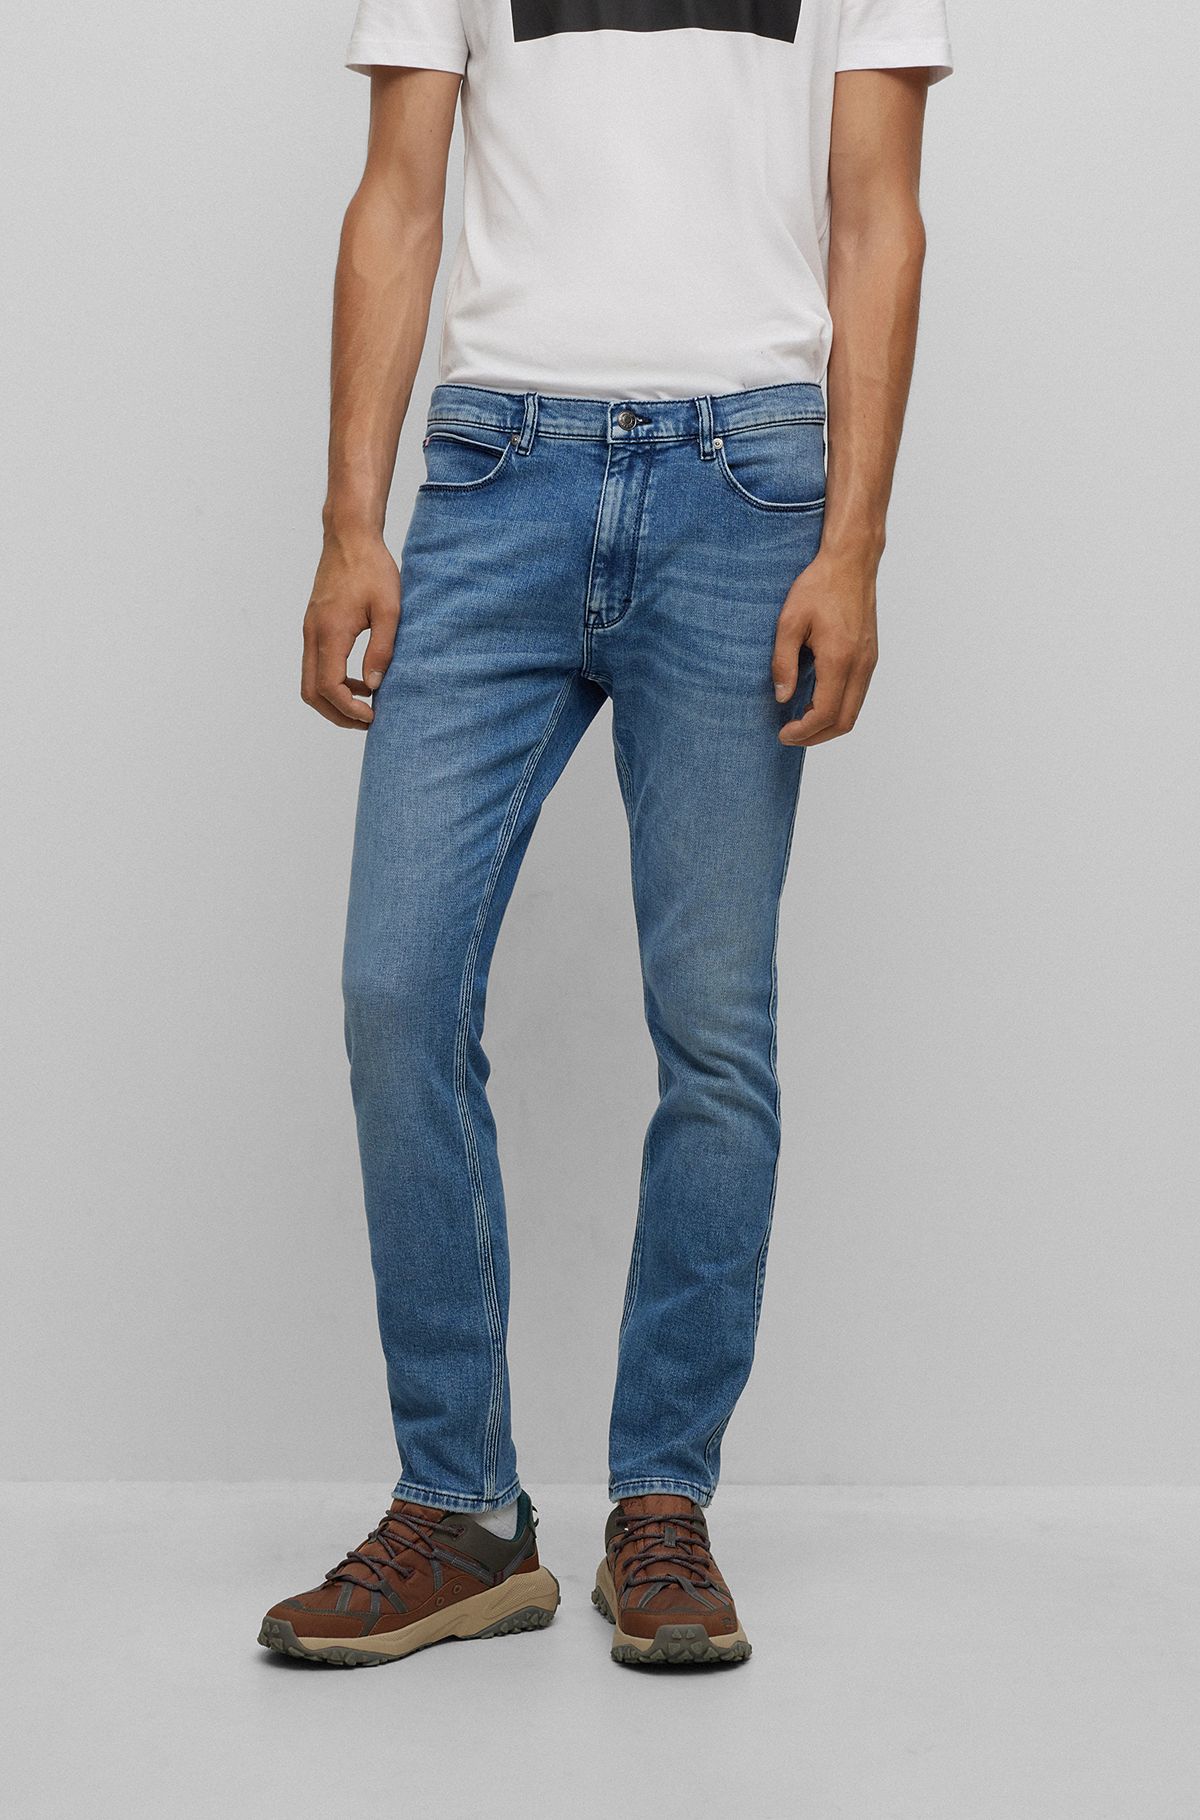 Extra-slim-fit jeans in blue super-soft denim, Blue